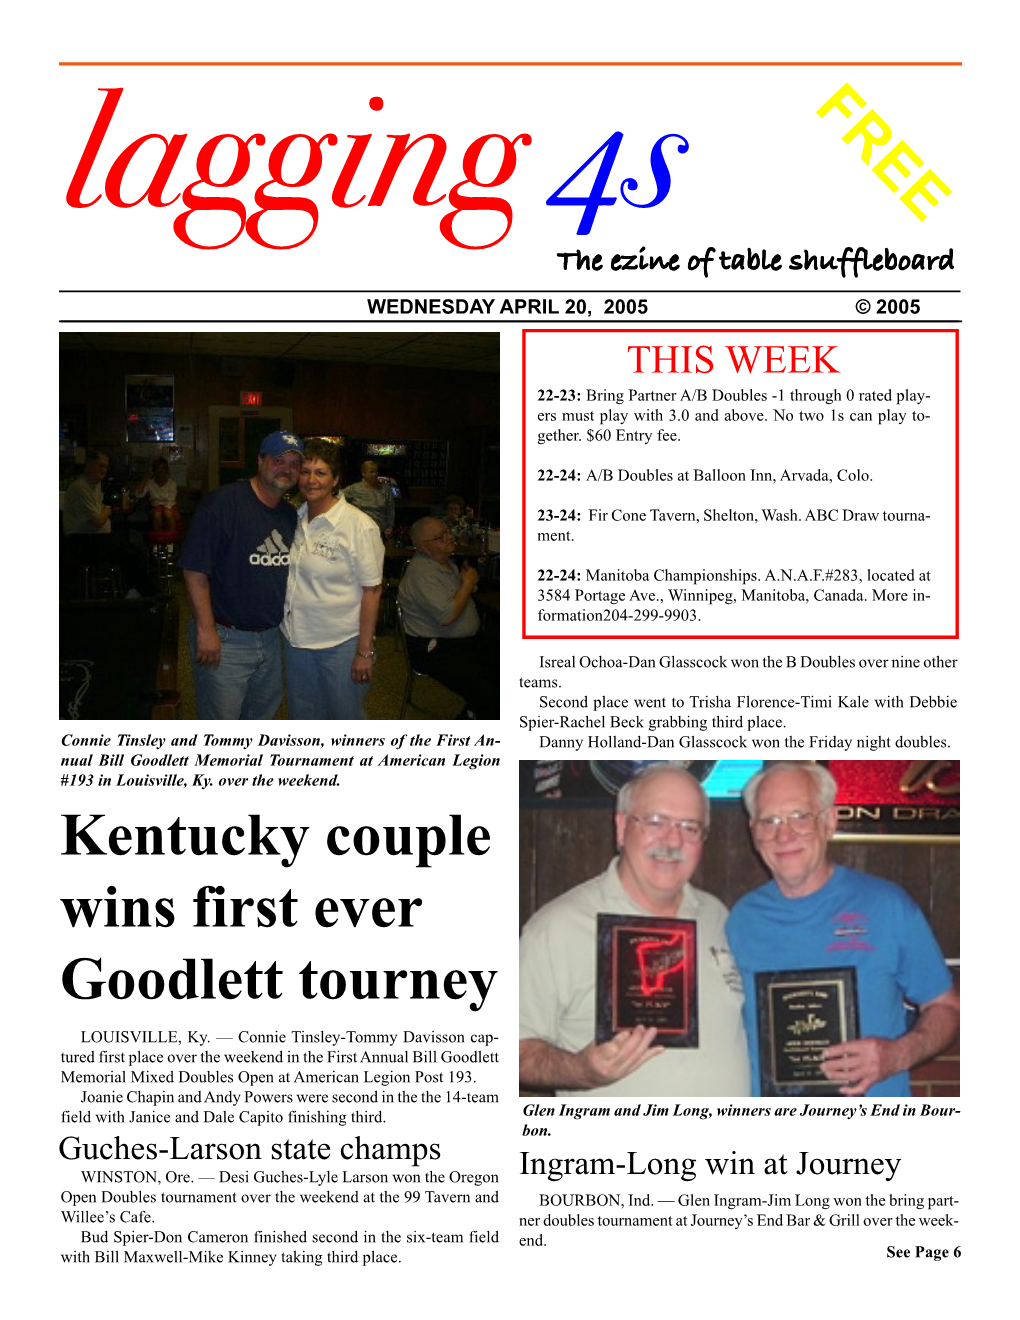 FREE Kentucky Couple Wins First Ever Goodlett Tourney